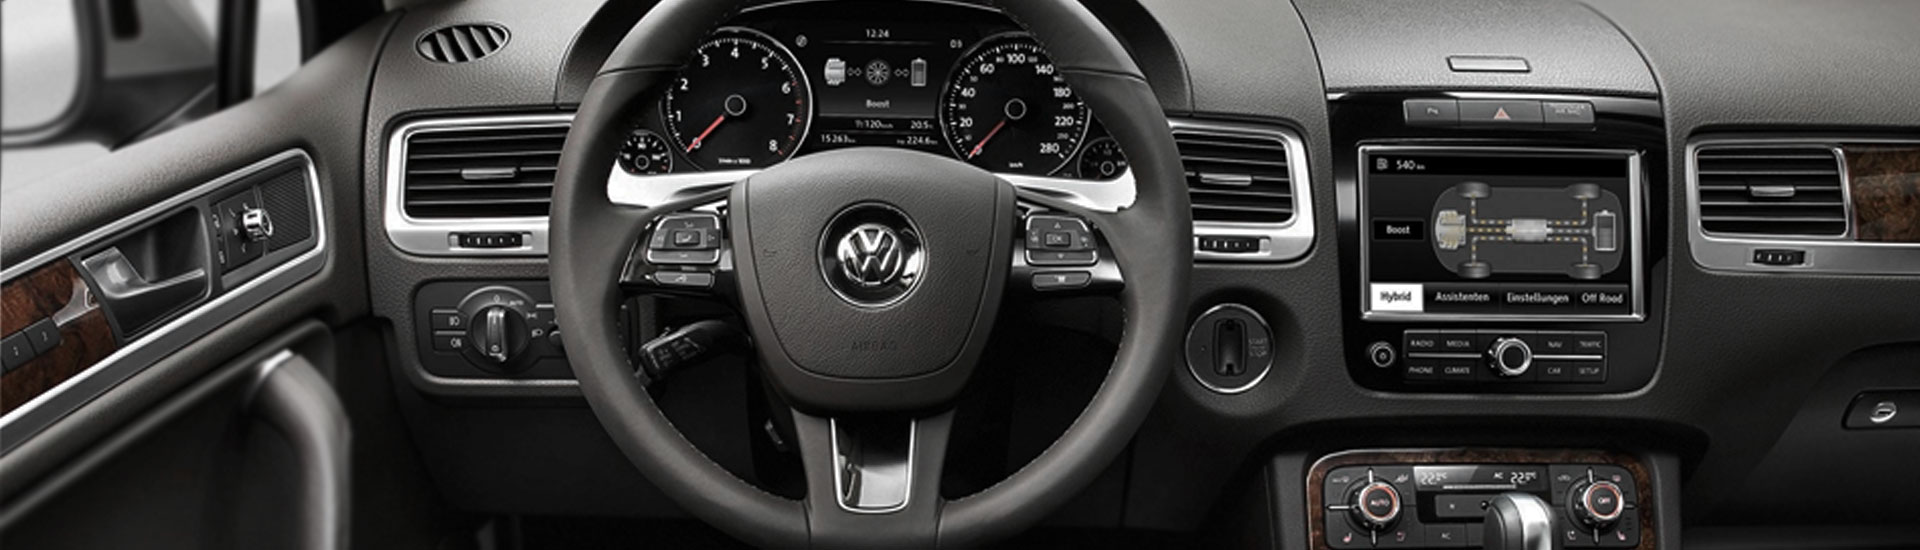 Volkswagen Touareg Custom Dash Kits